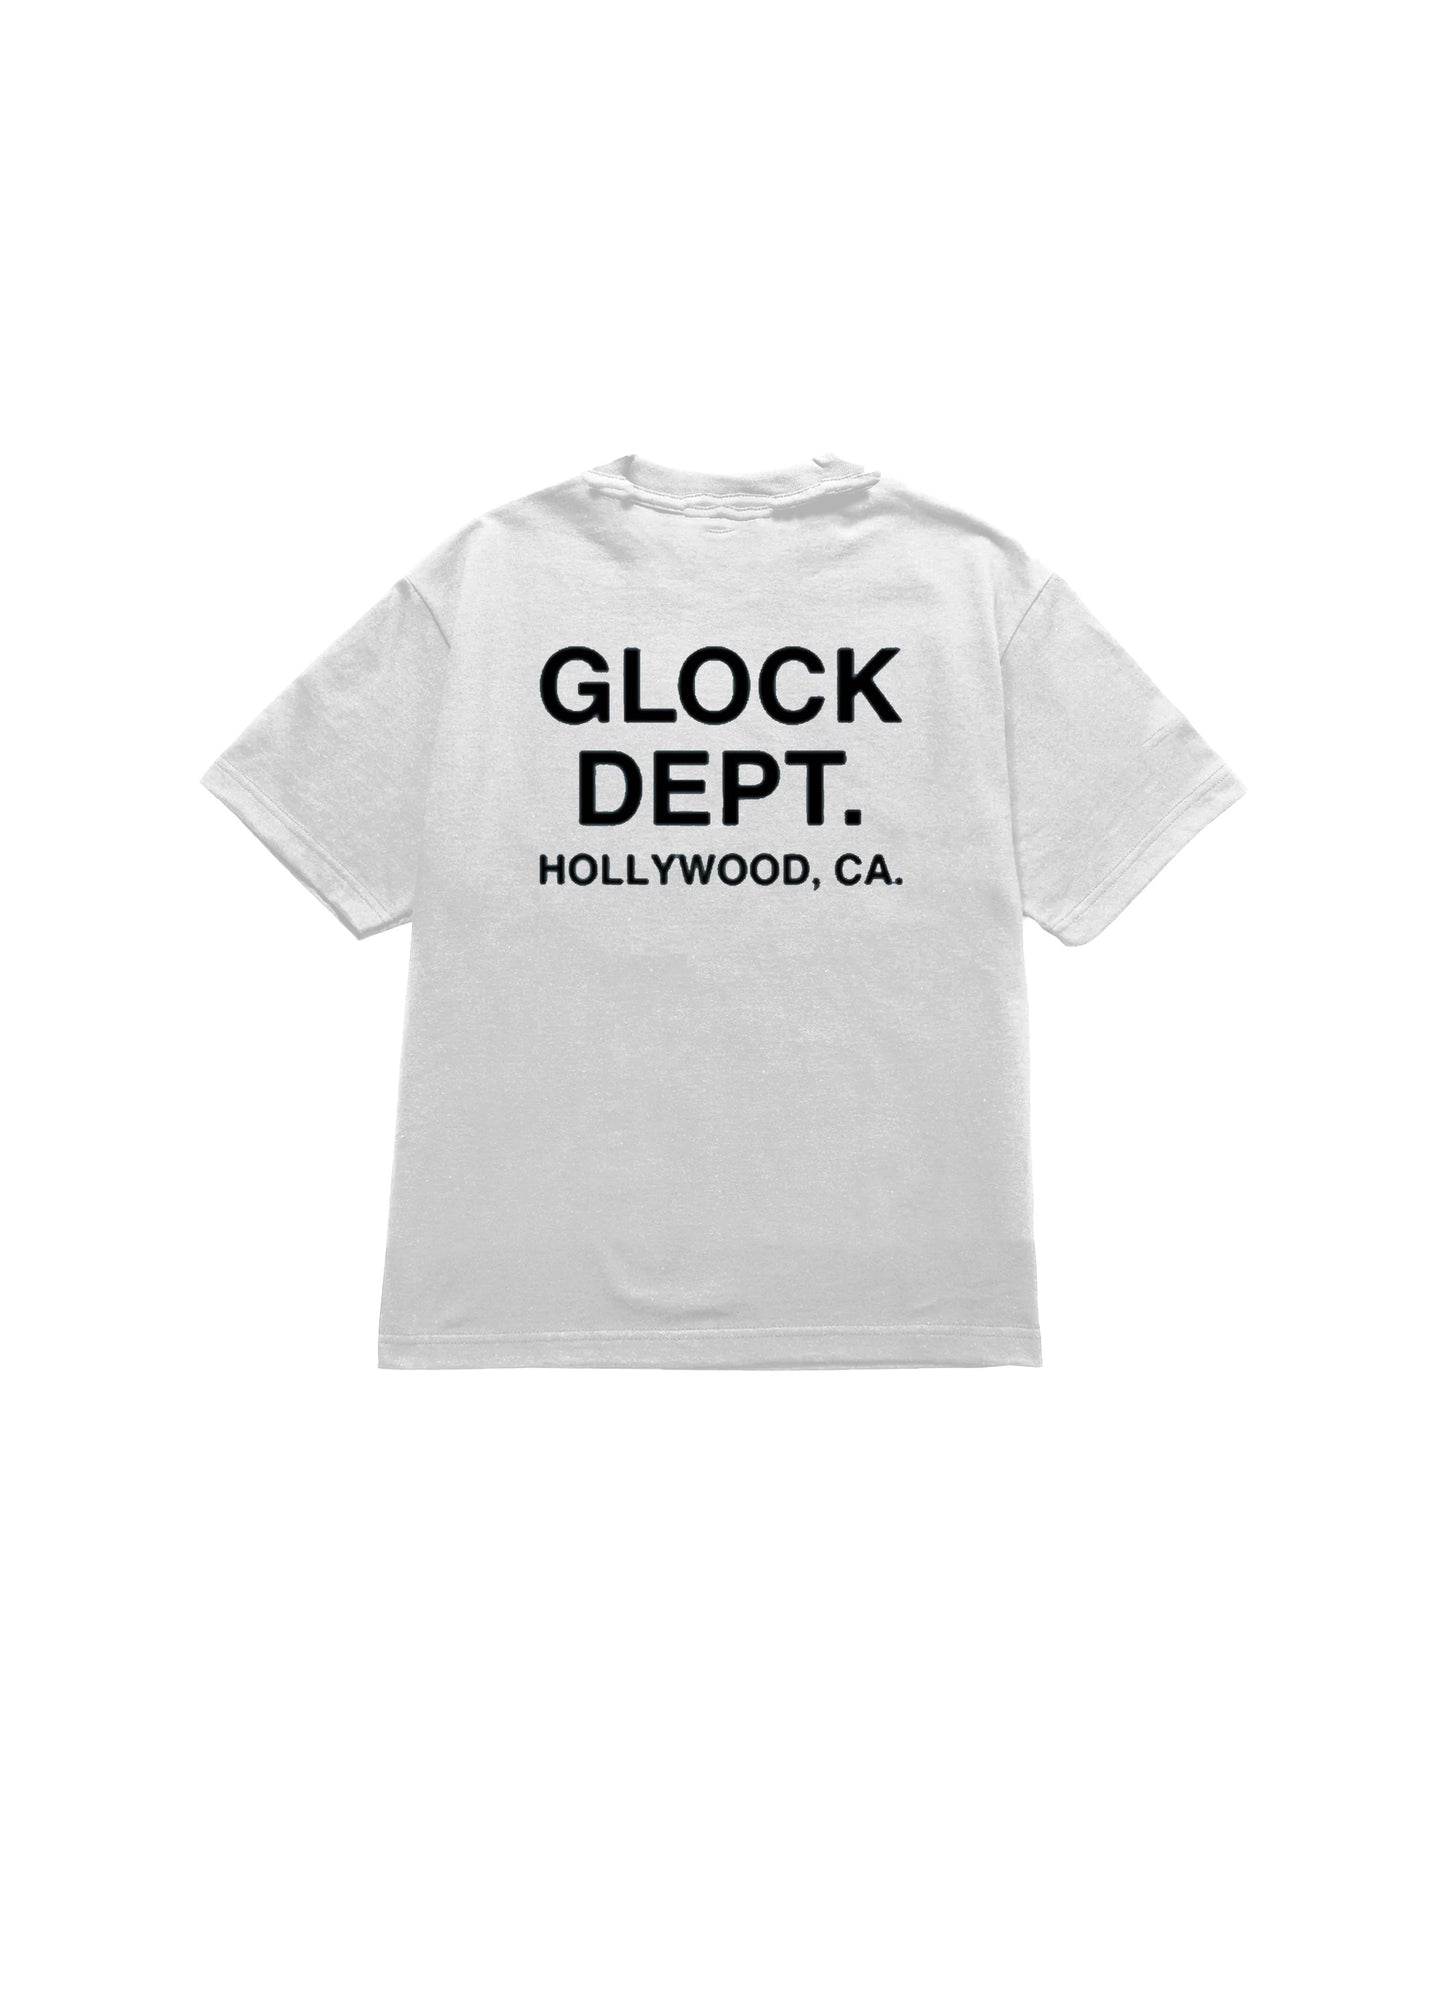 Gun Shop Glock Dept. T-Shirt White